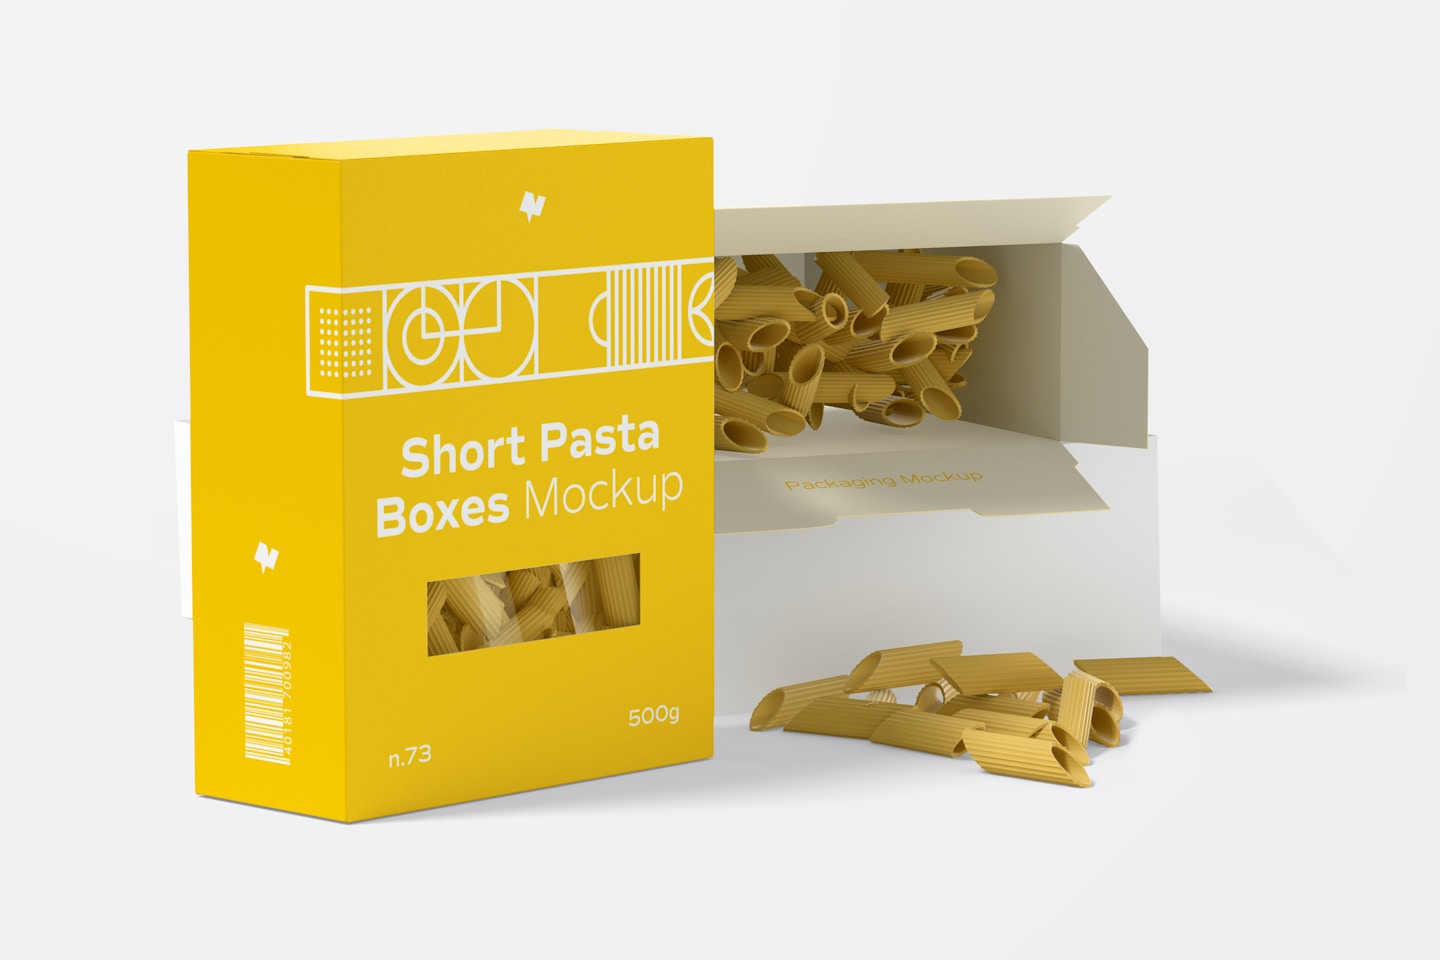 Short Pasta Boxes Mockup, Perspective